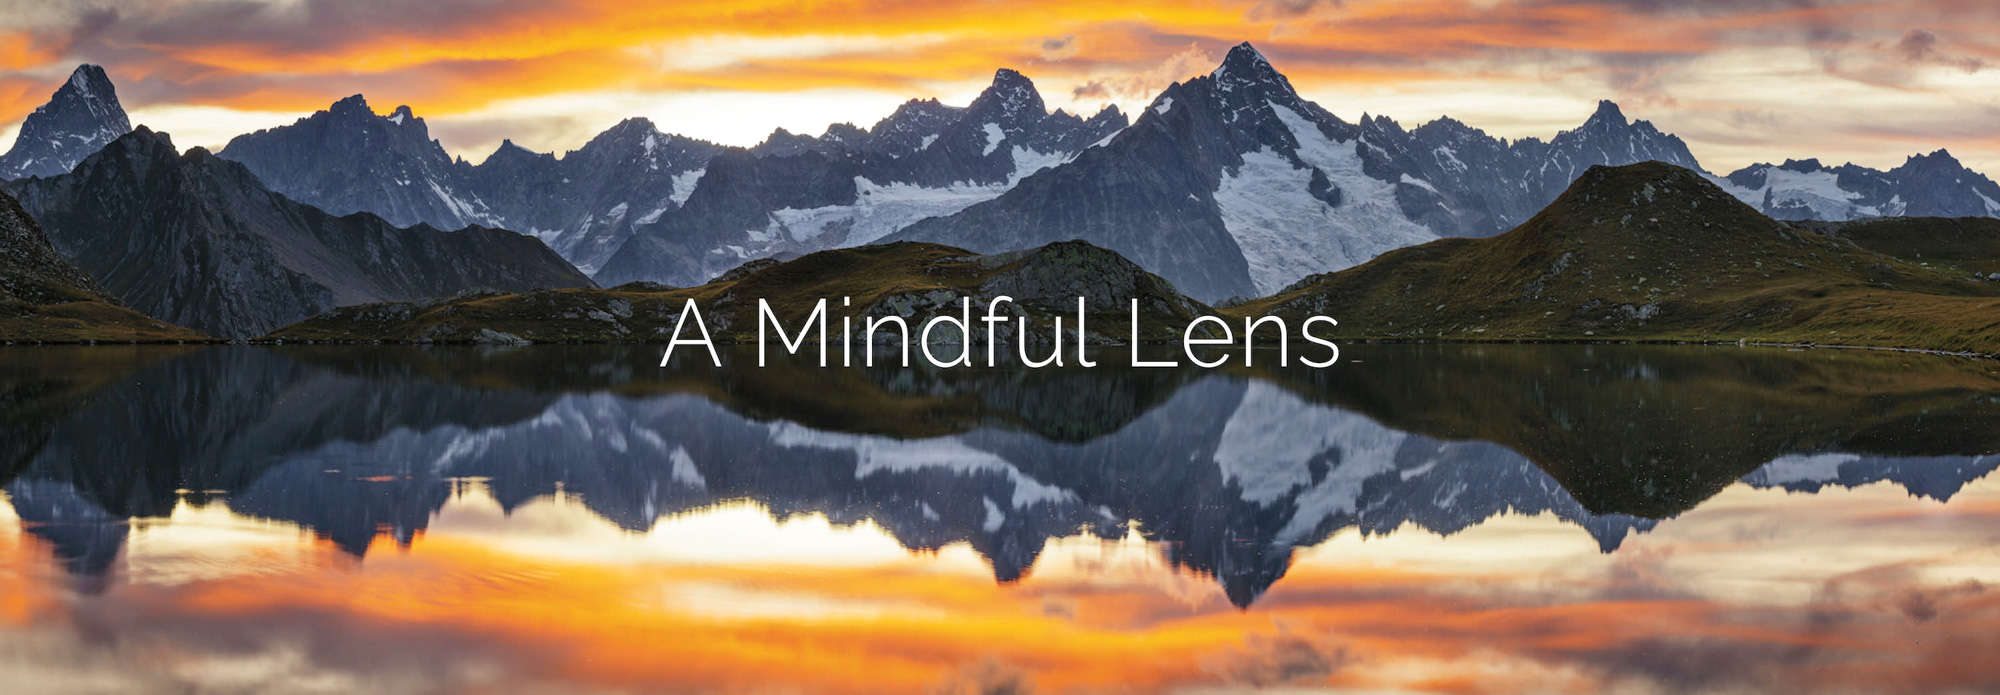 A Mindful Lens